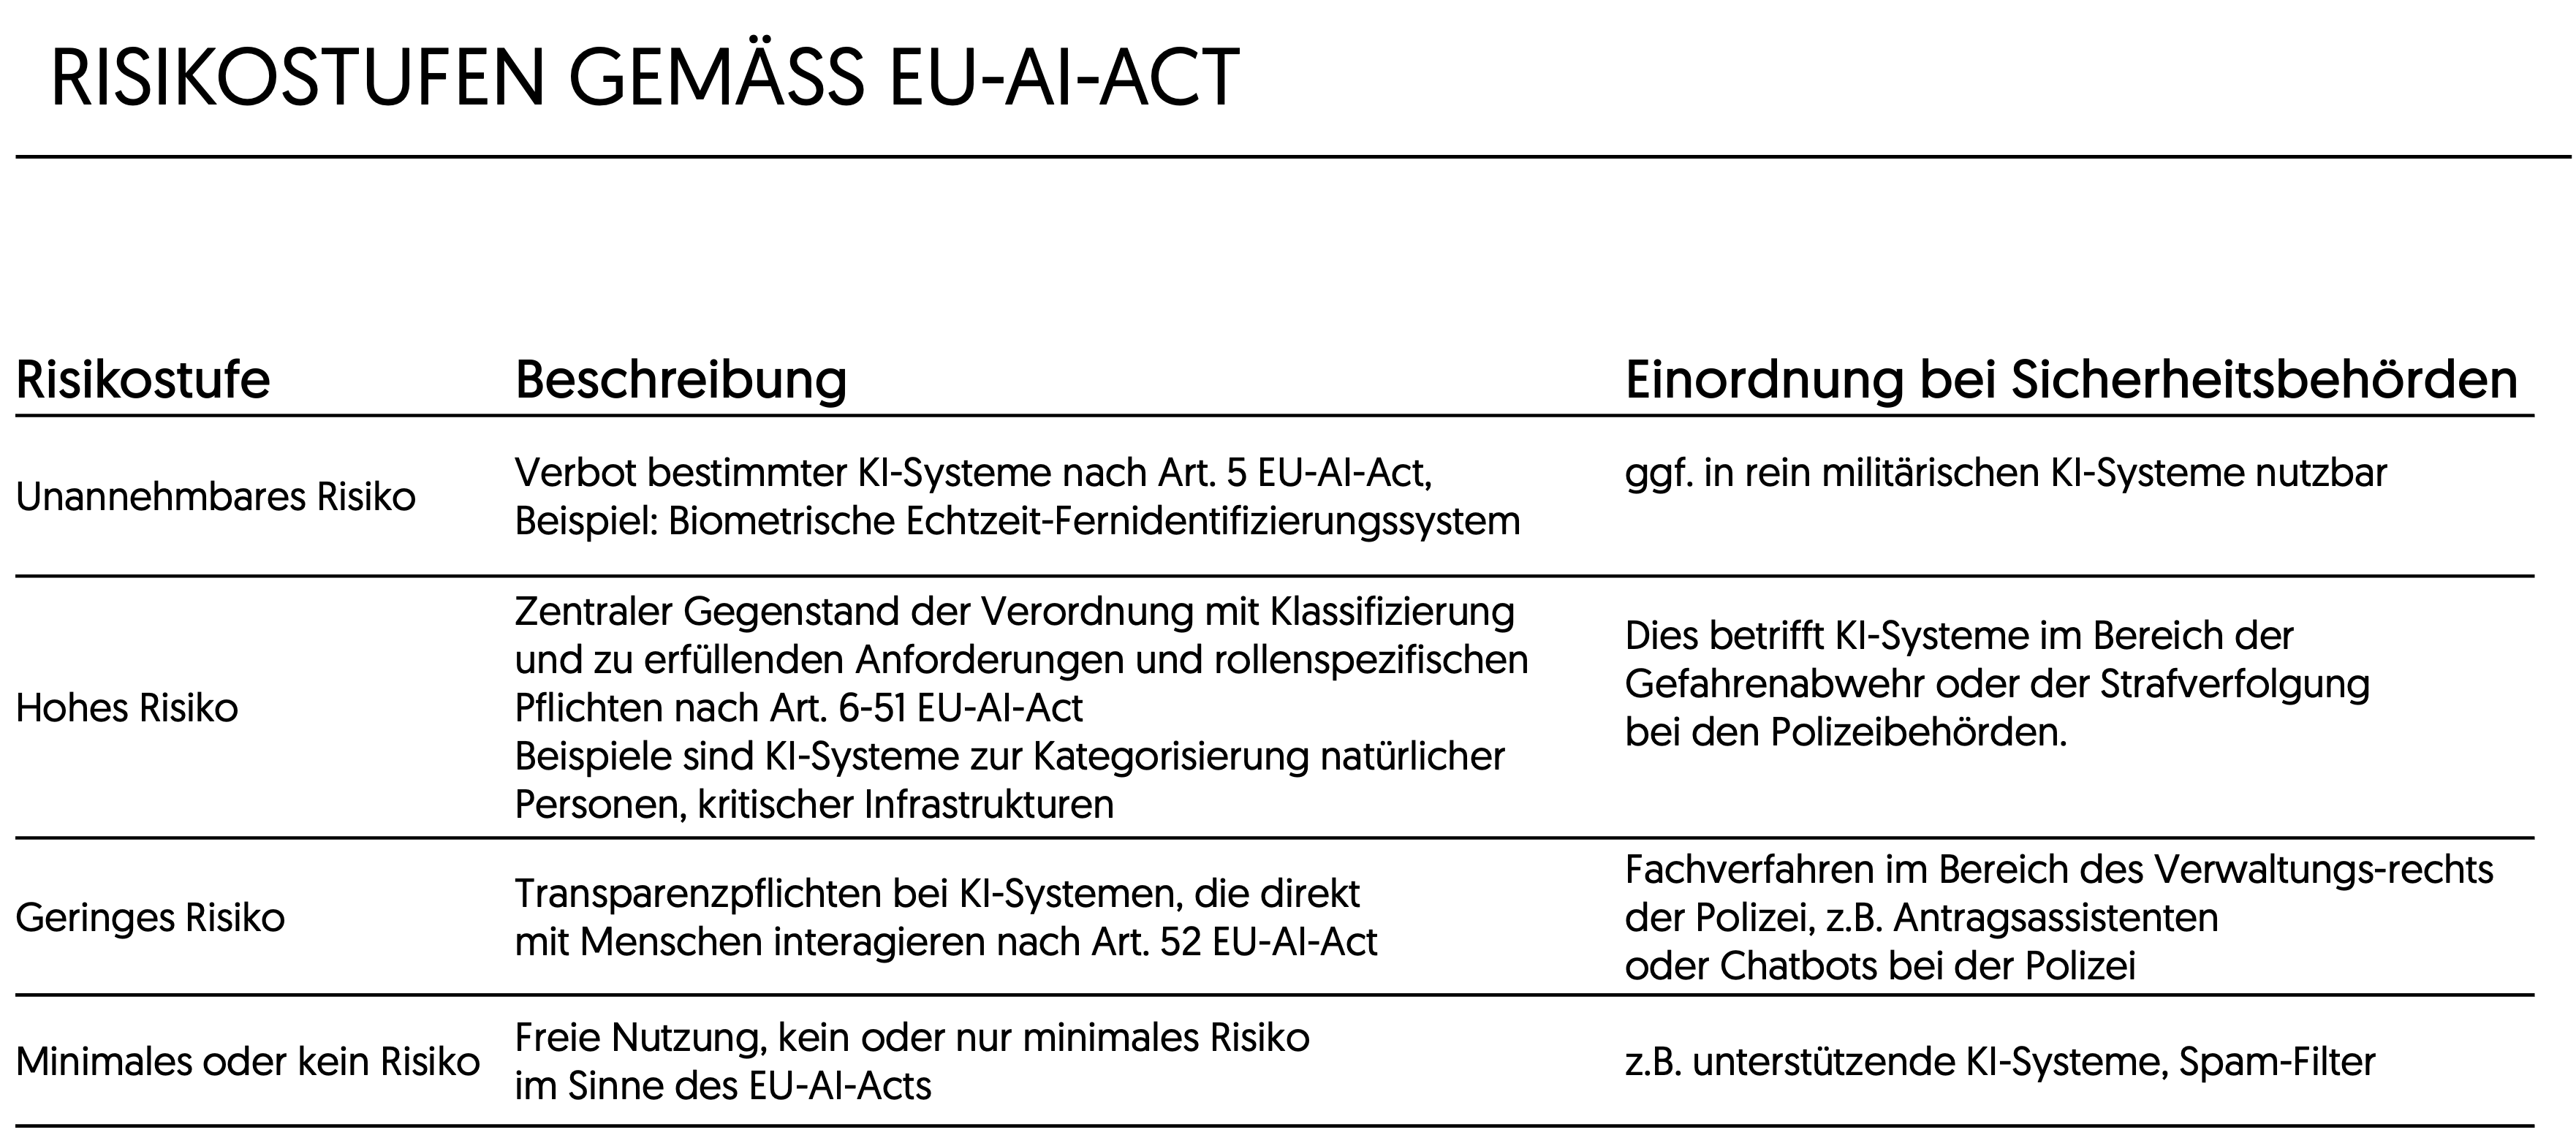 Risikostufen gemäß EU-AI-ACT